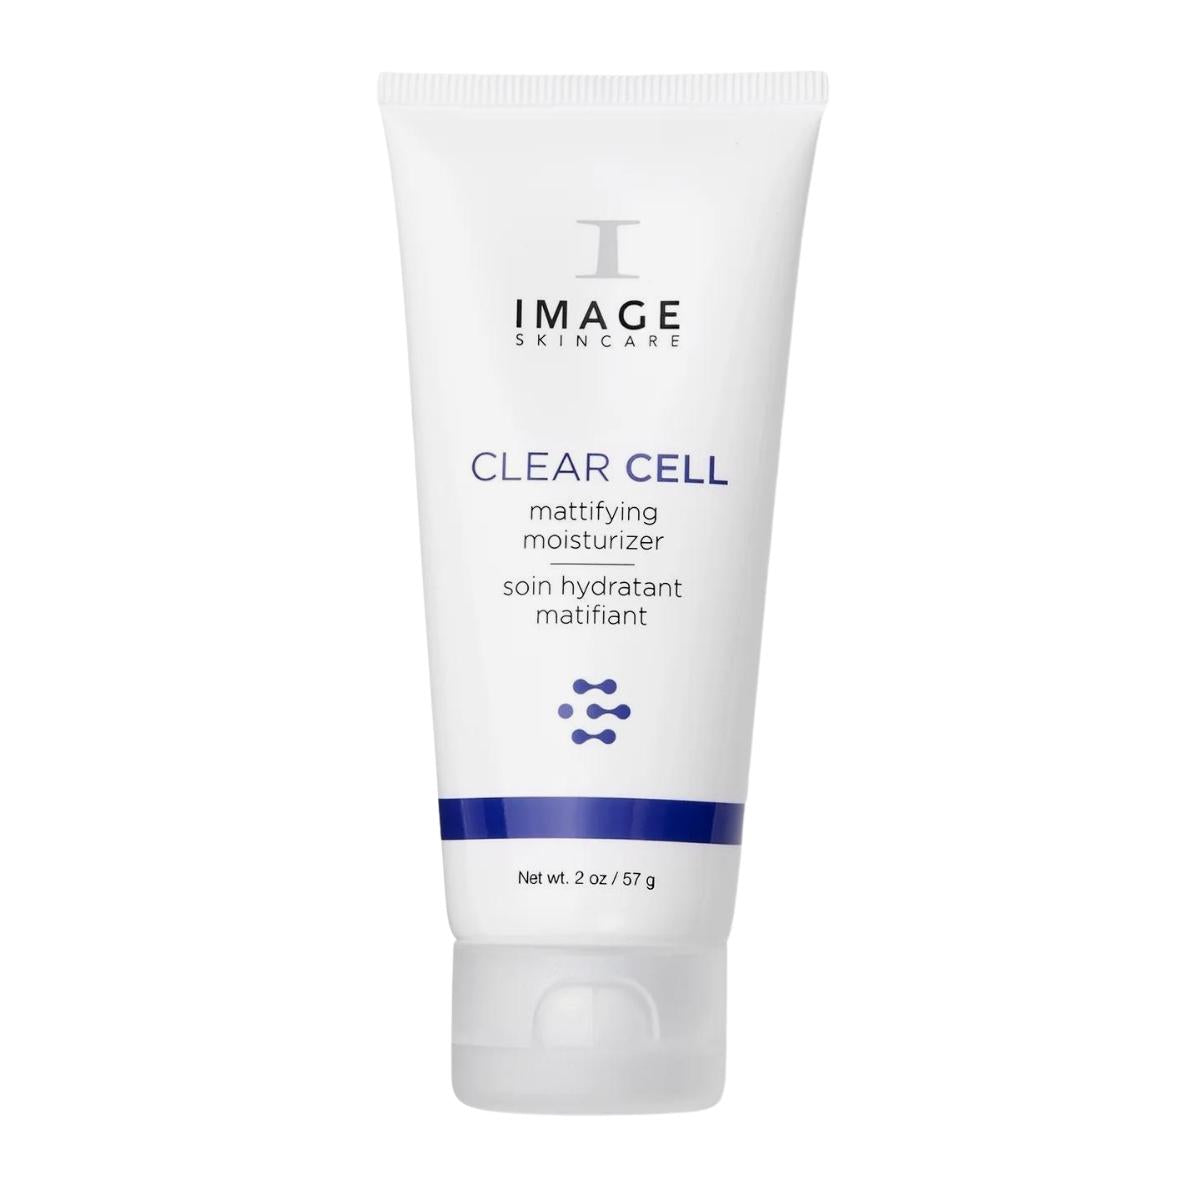 IMAGE Skincare Clear Cell Mattifying Moisturiser